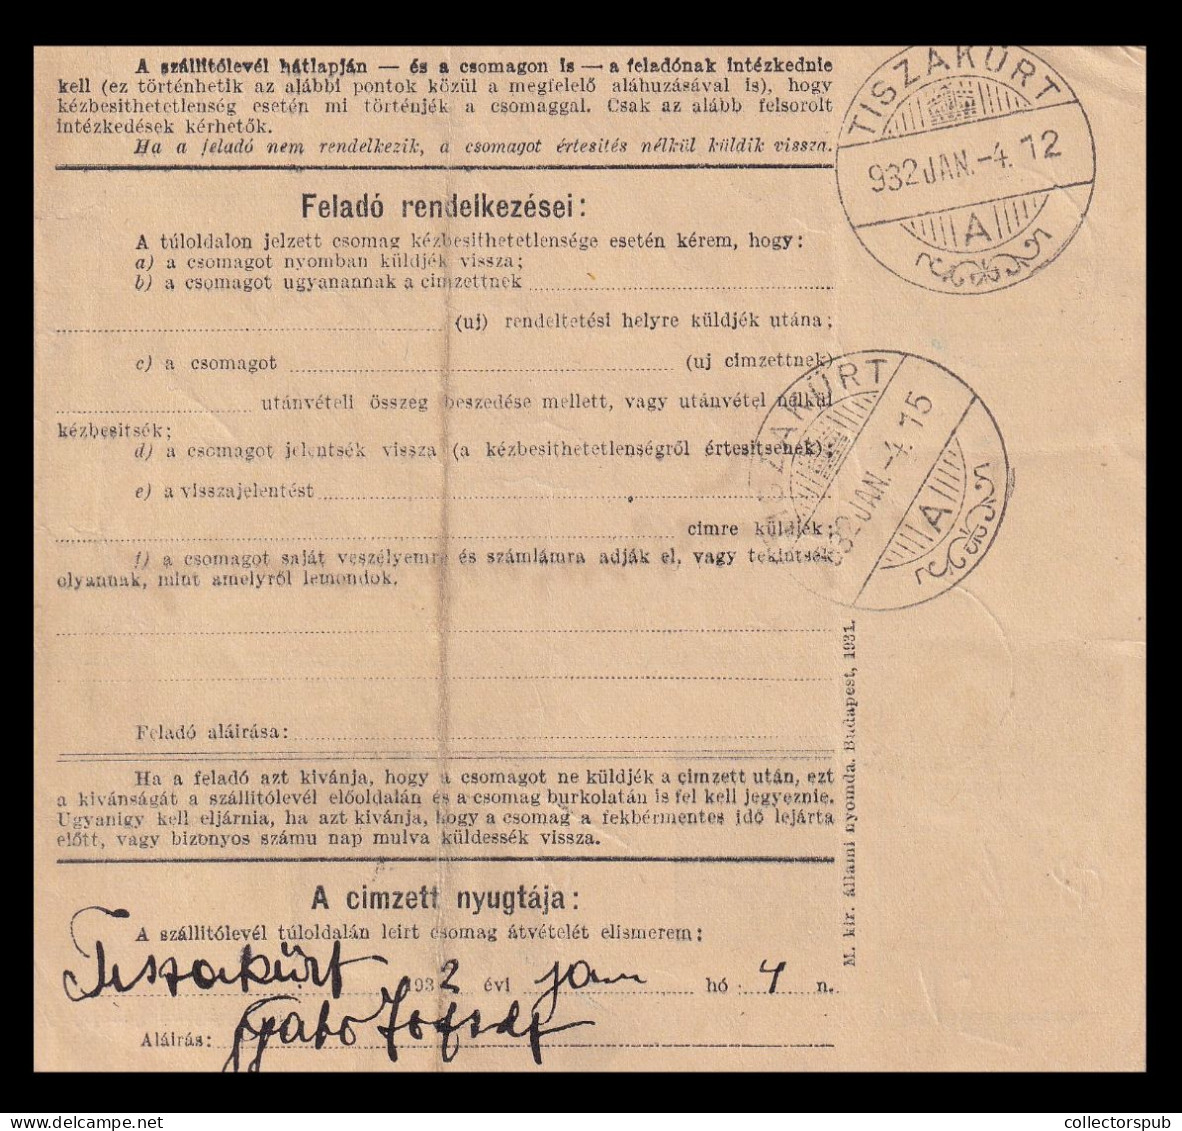 HUNGARY Nice Parcel Post Card  Magyar.Kir.Posta. 25 1932. "terjedelmes" - Paketmarken